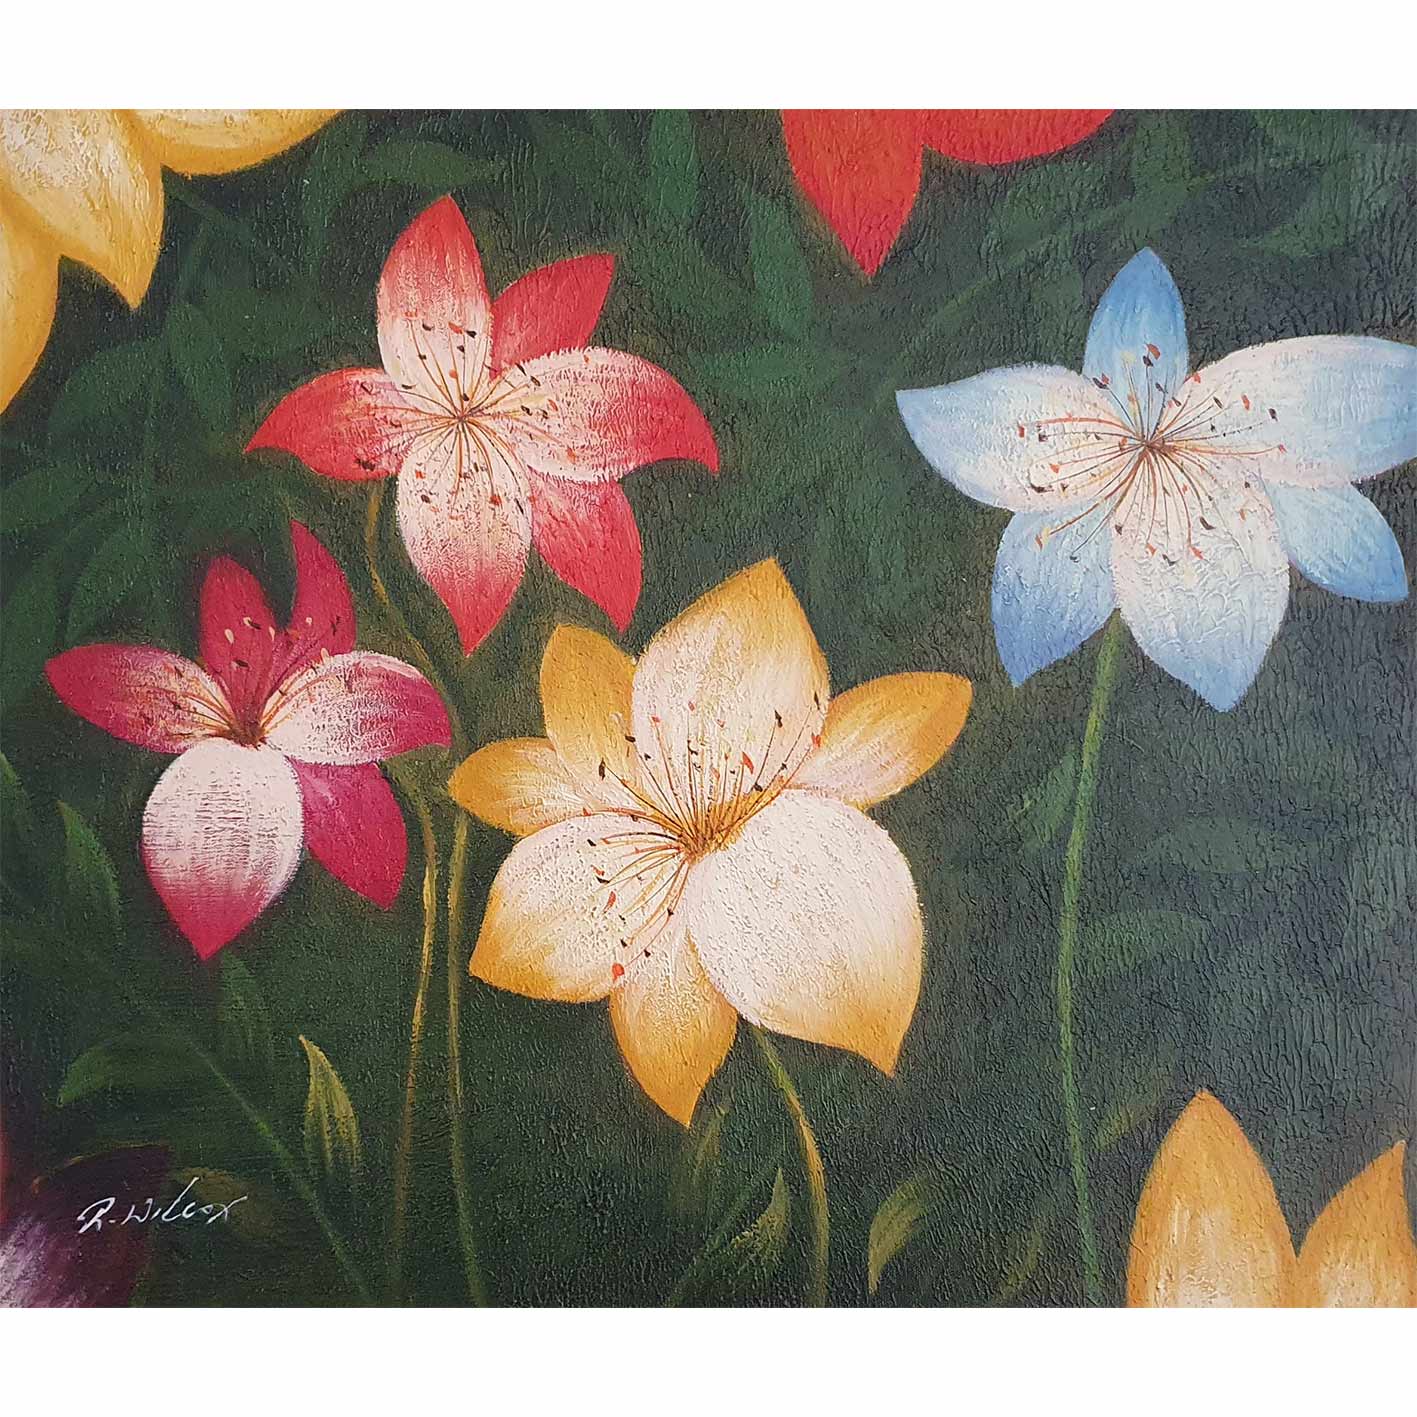 Flower Garden Painting 50x60 cm [2 pieces]